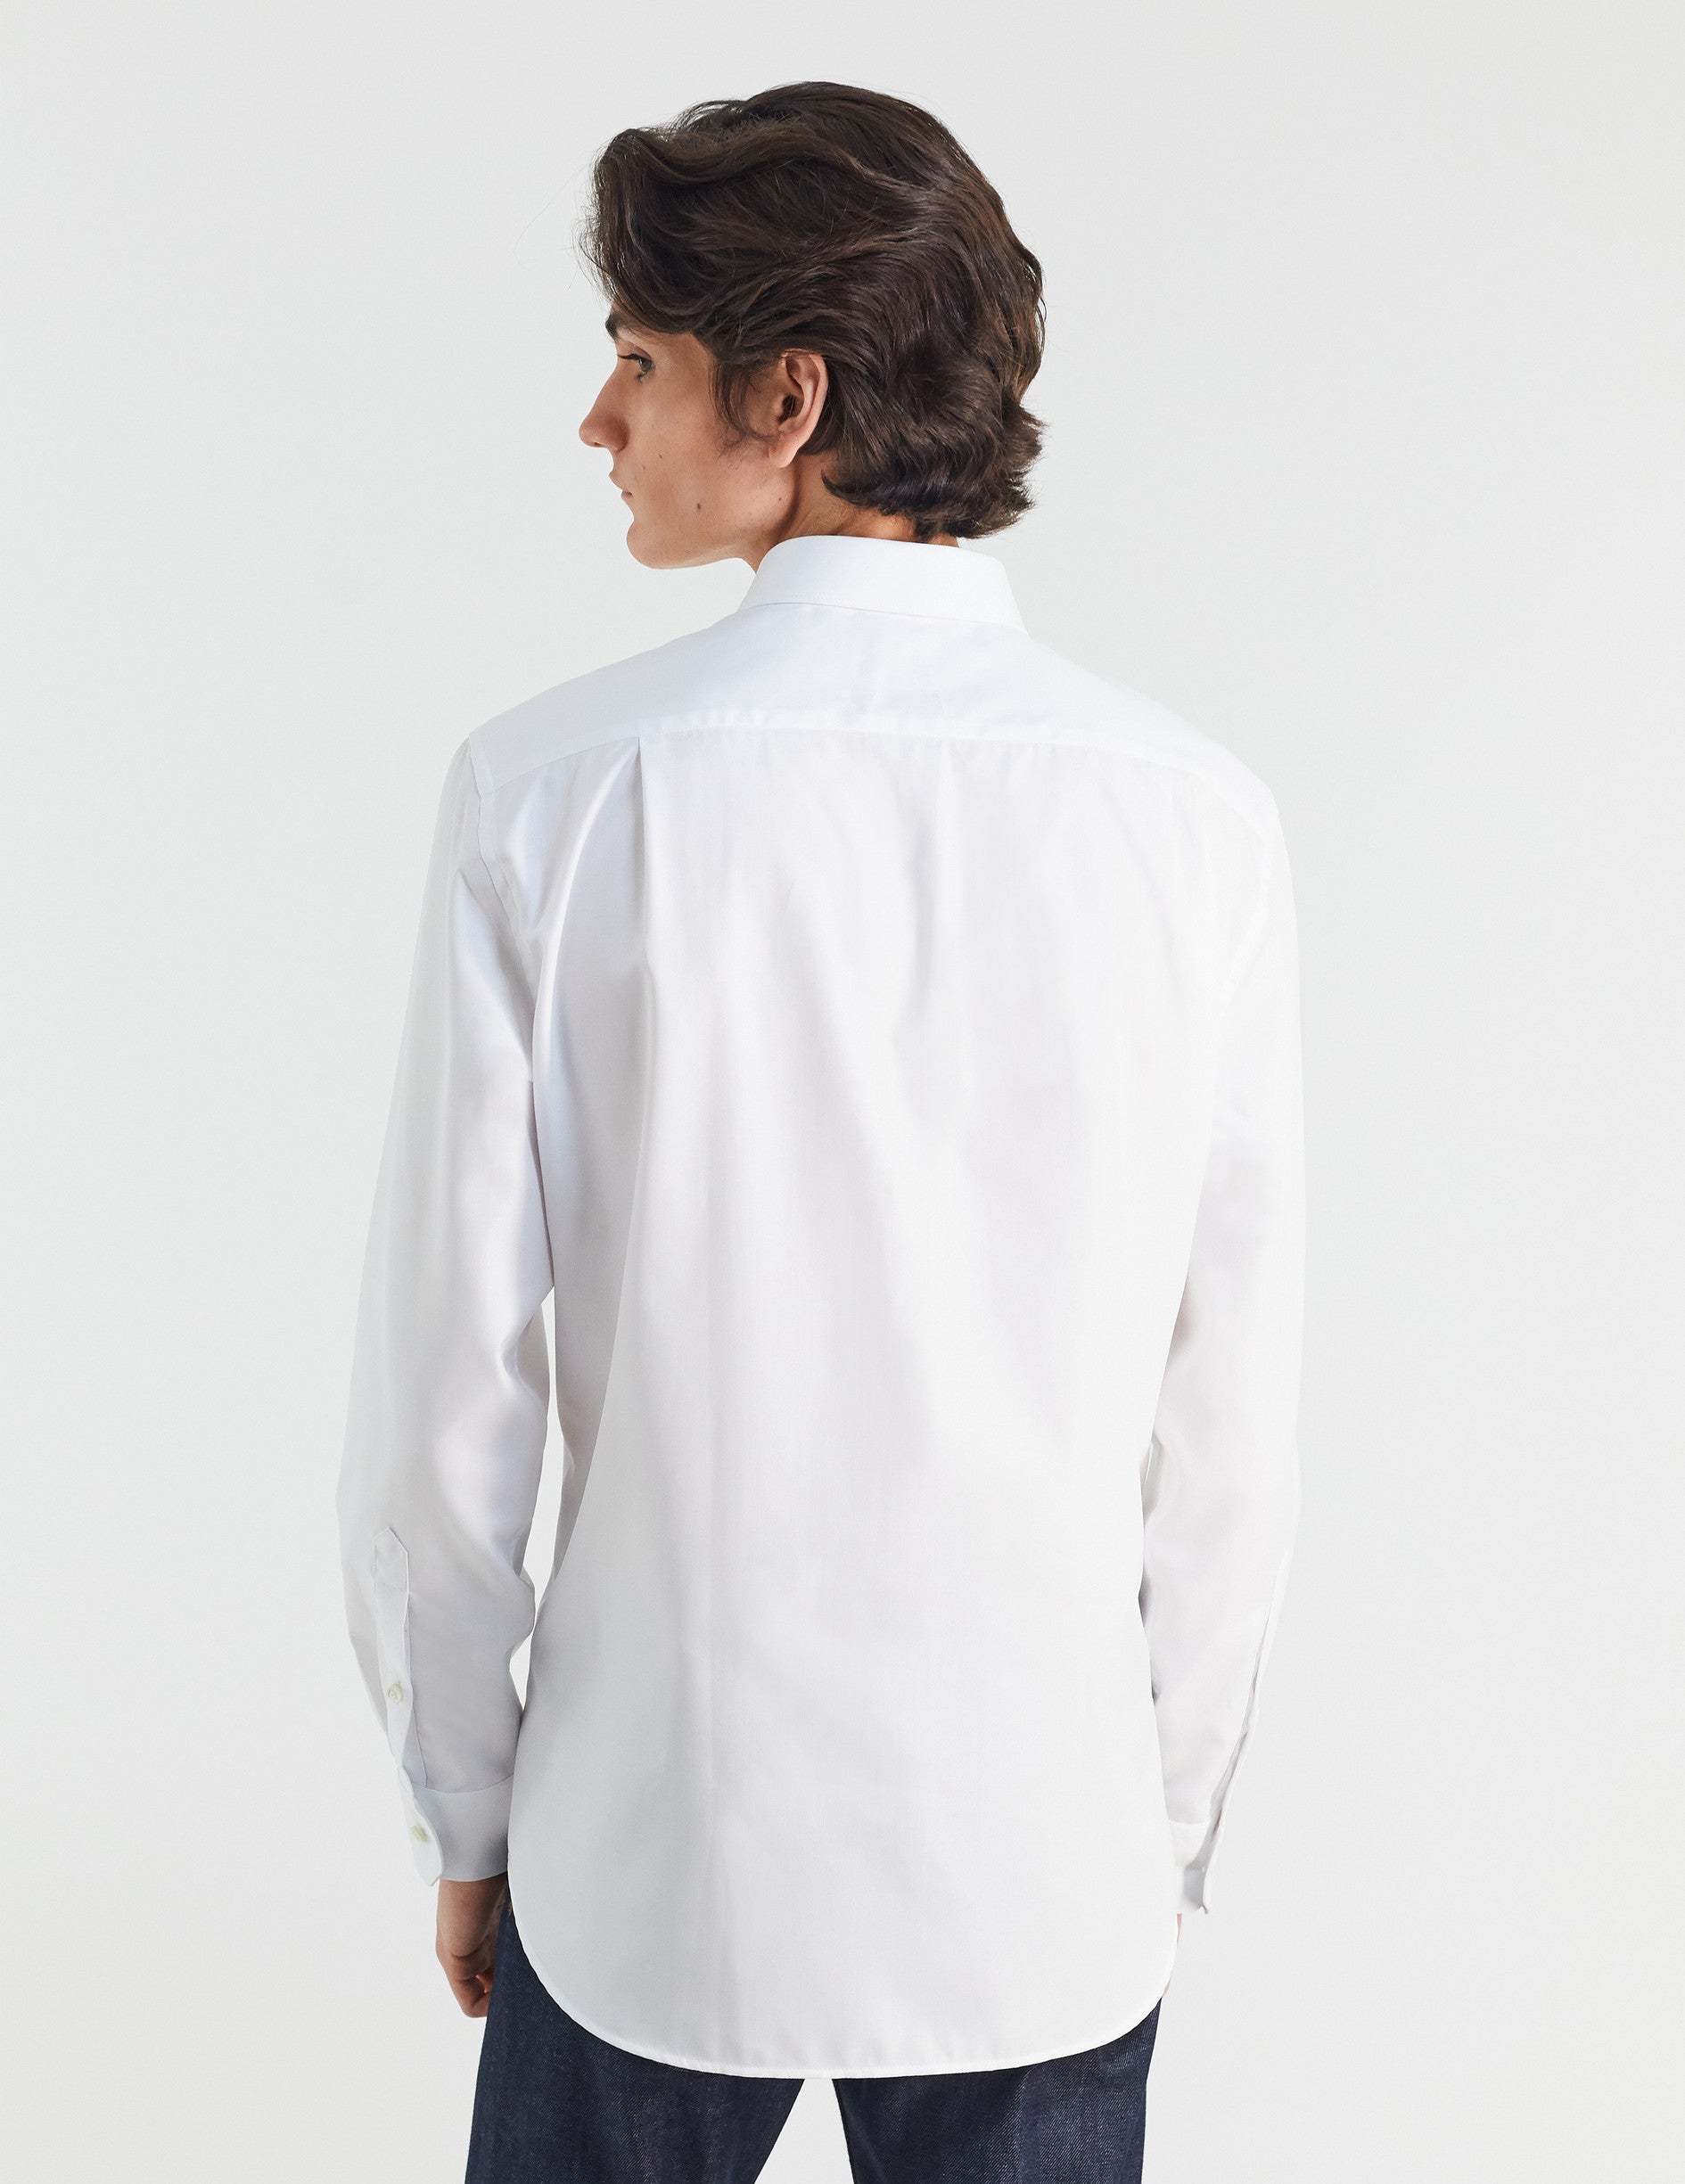 White Classic Shirt - Shaped - Figaret Collar